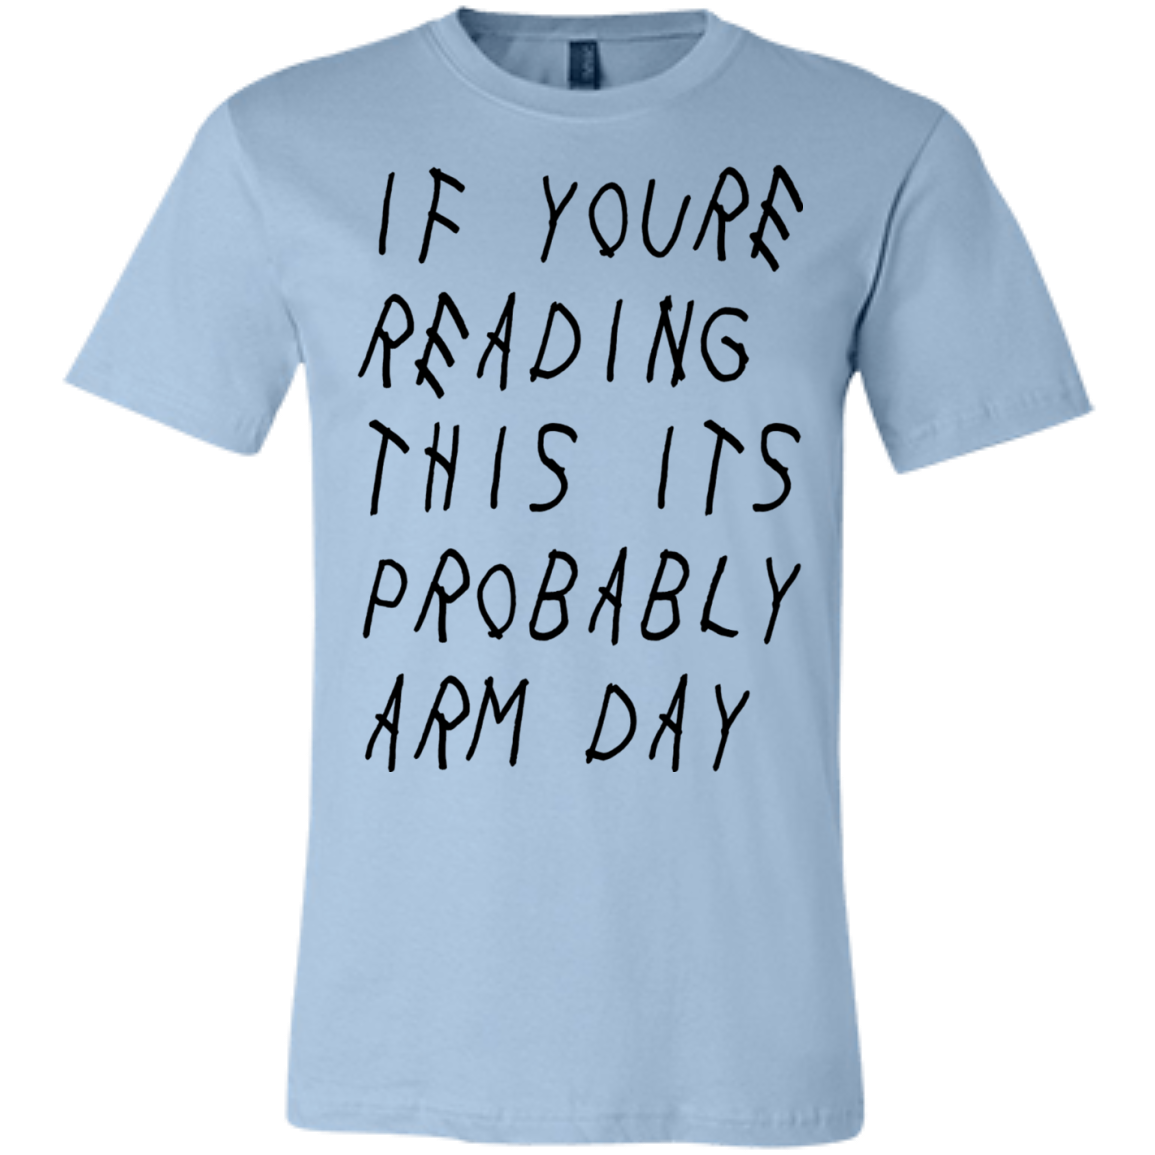 Arm Day Short-Sleeve T-Shirt BLK